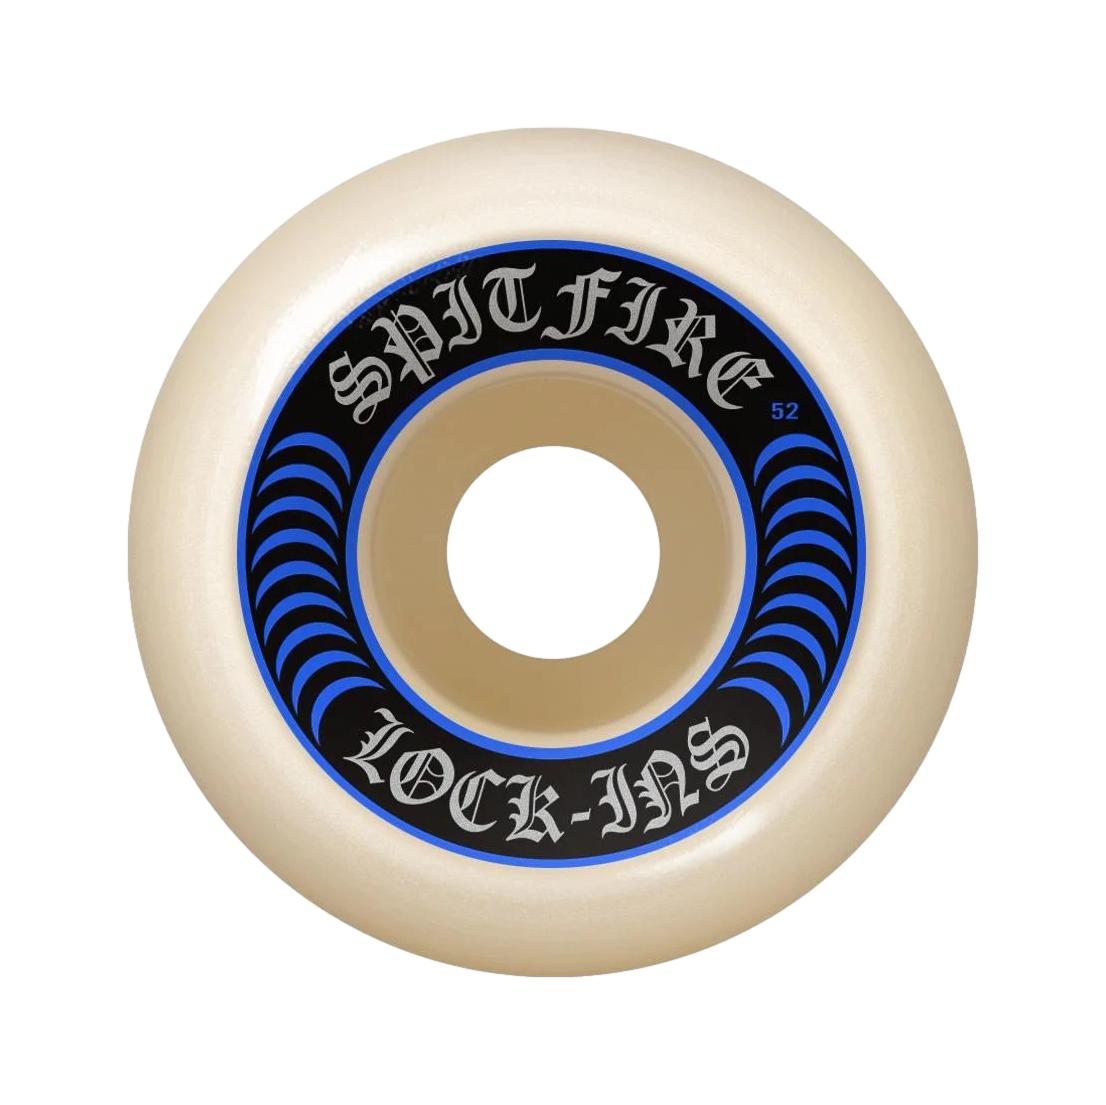 SF F499 Lock Ins 57 - Venue Skateboards